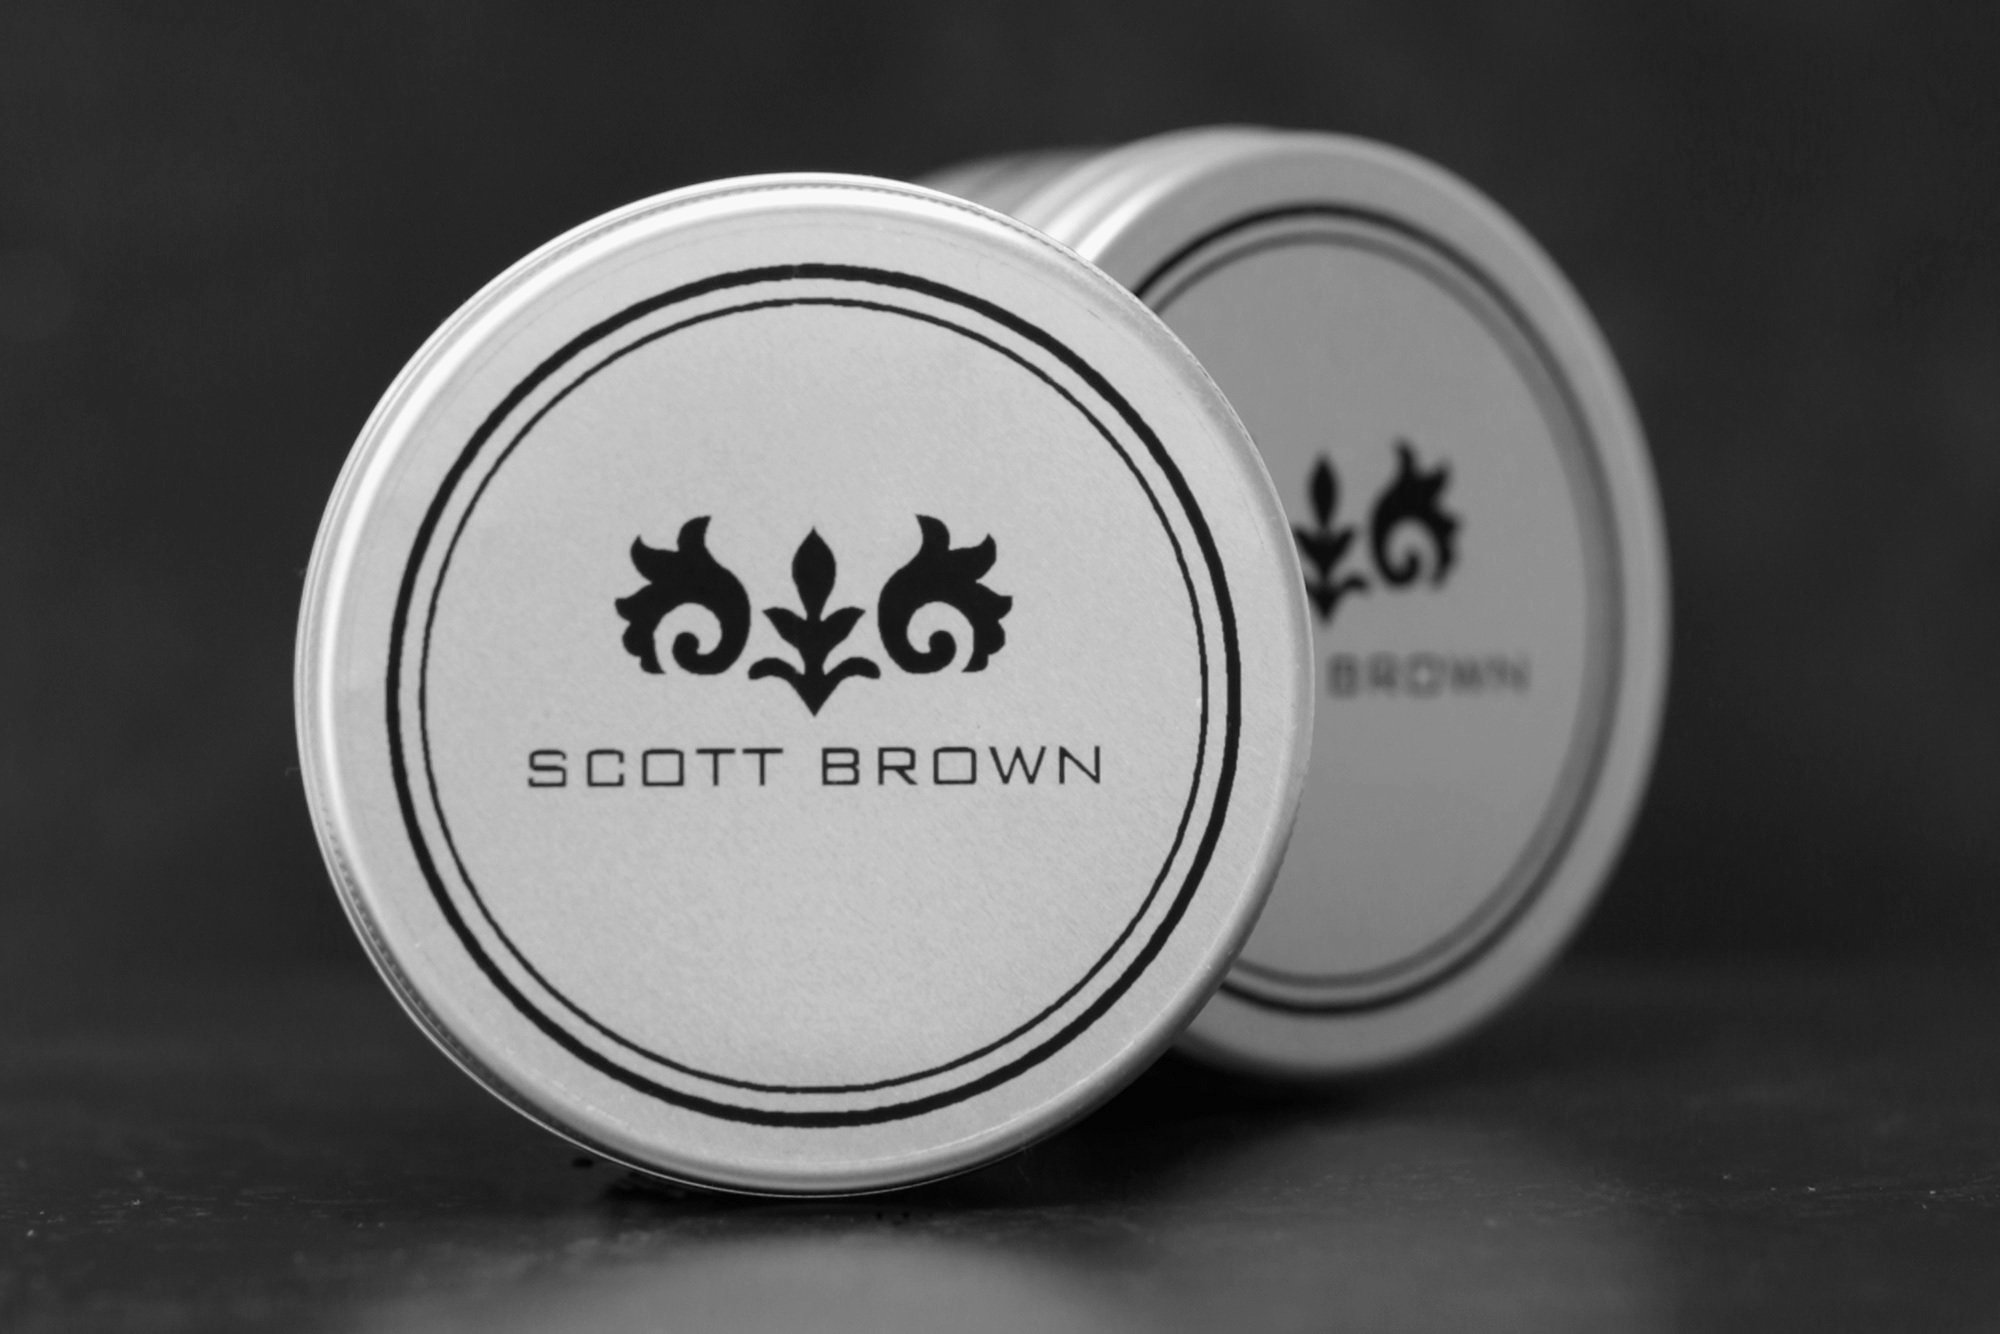 T Voucher Mens Grooming Twenty Pounds — Scott Brown Hair 